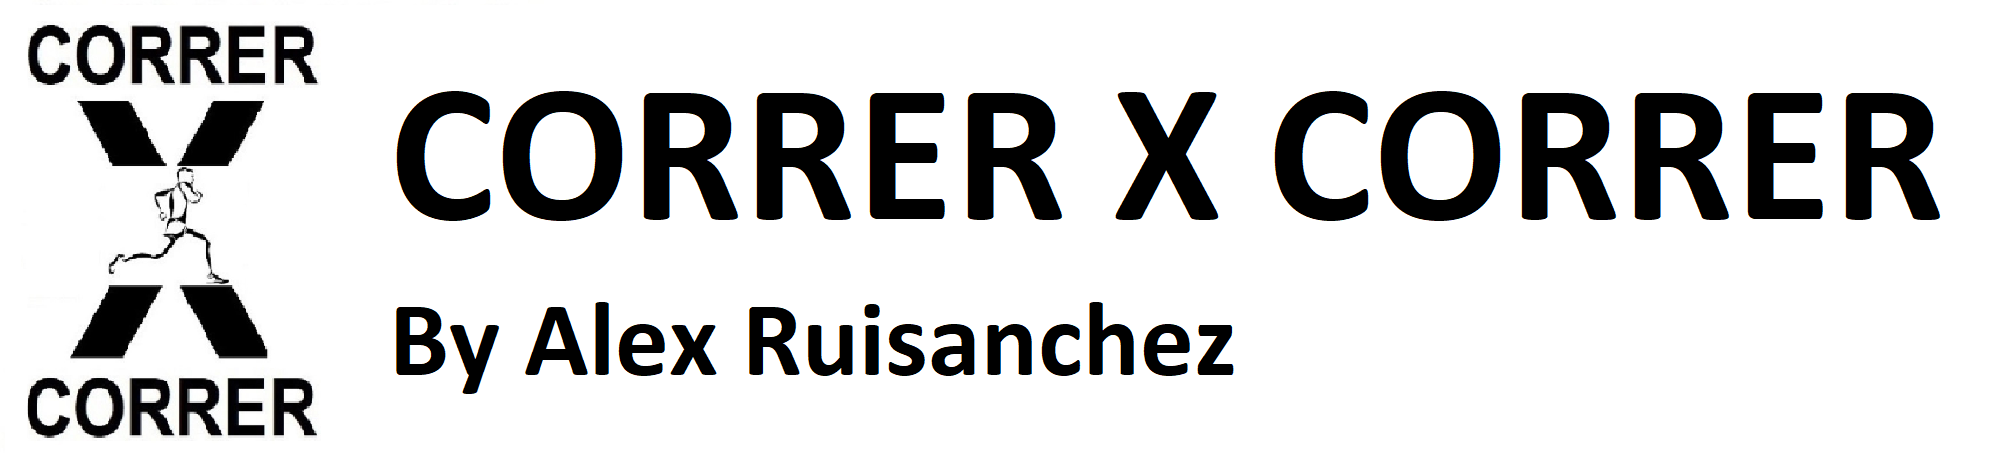 CORRER X CORRER by Alex Ruisanchez